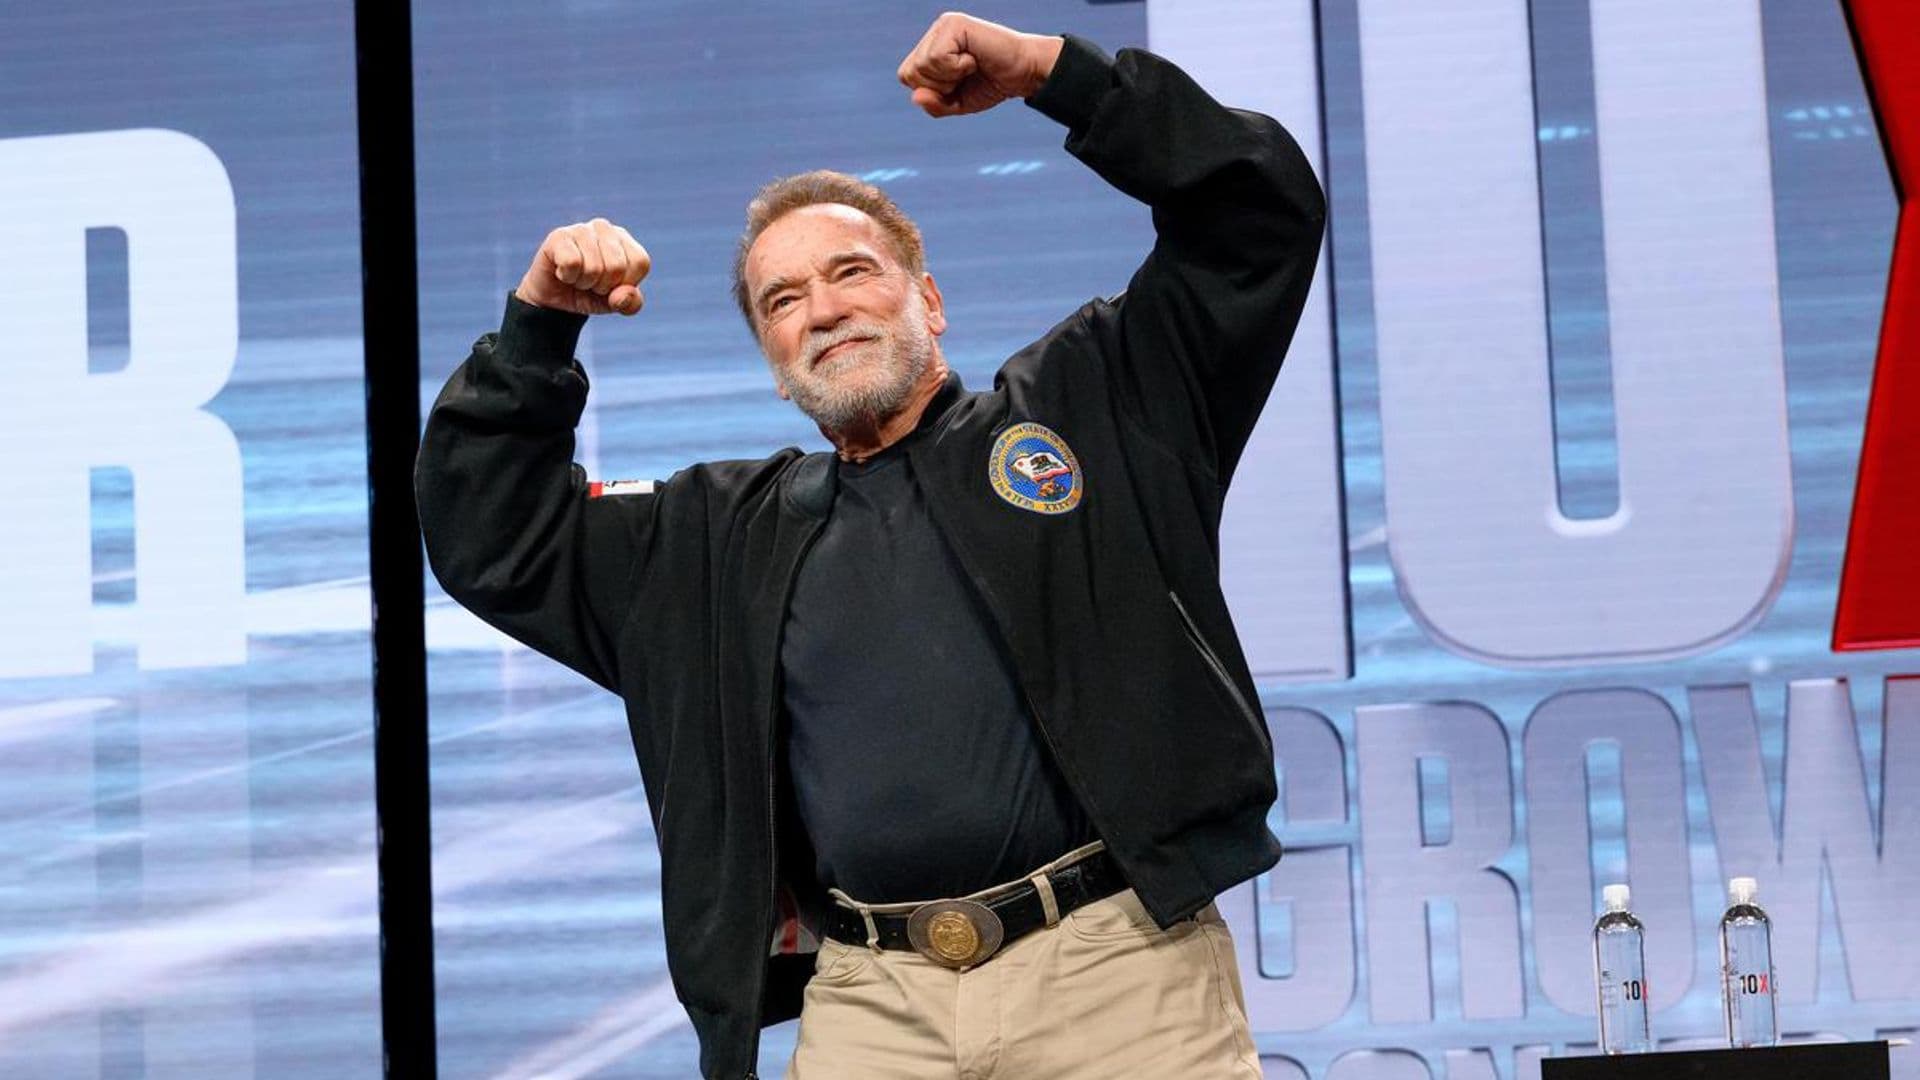 Arnold Schwarzenegger breaks a record ahead of FUBAR season 2